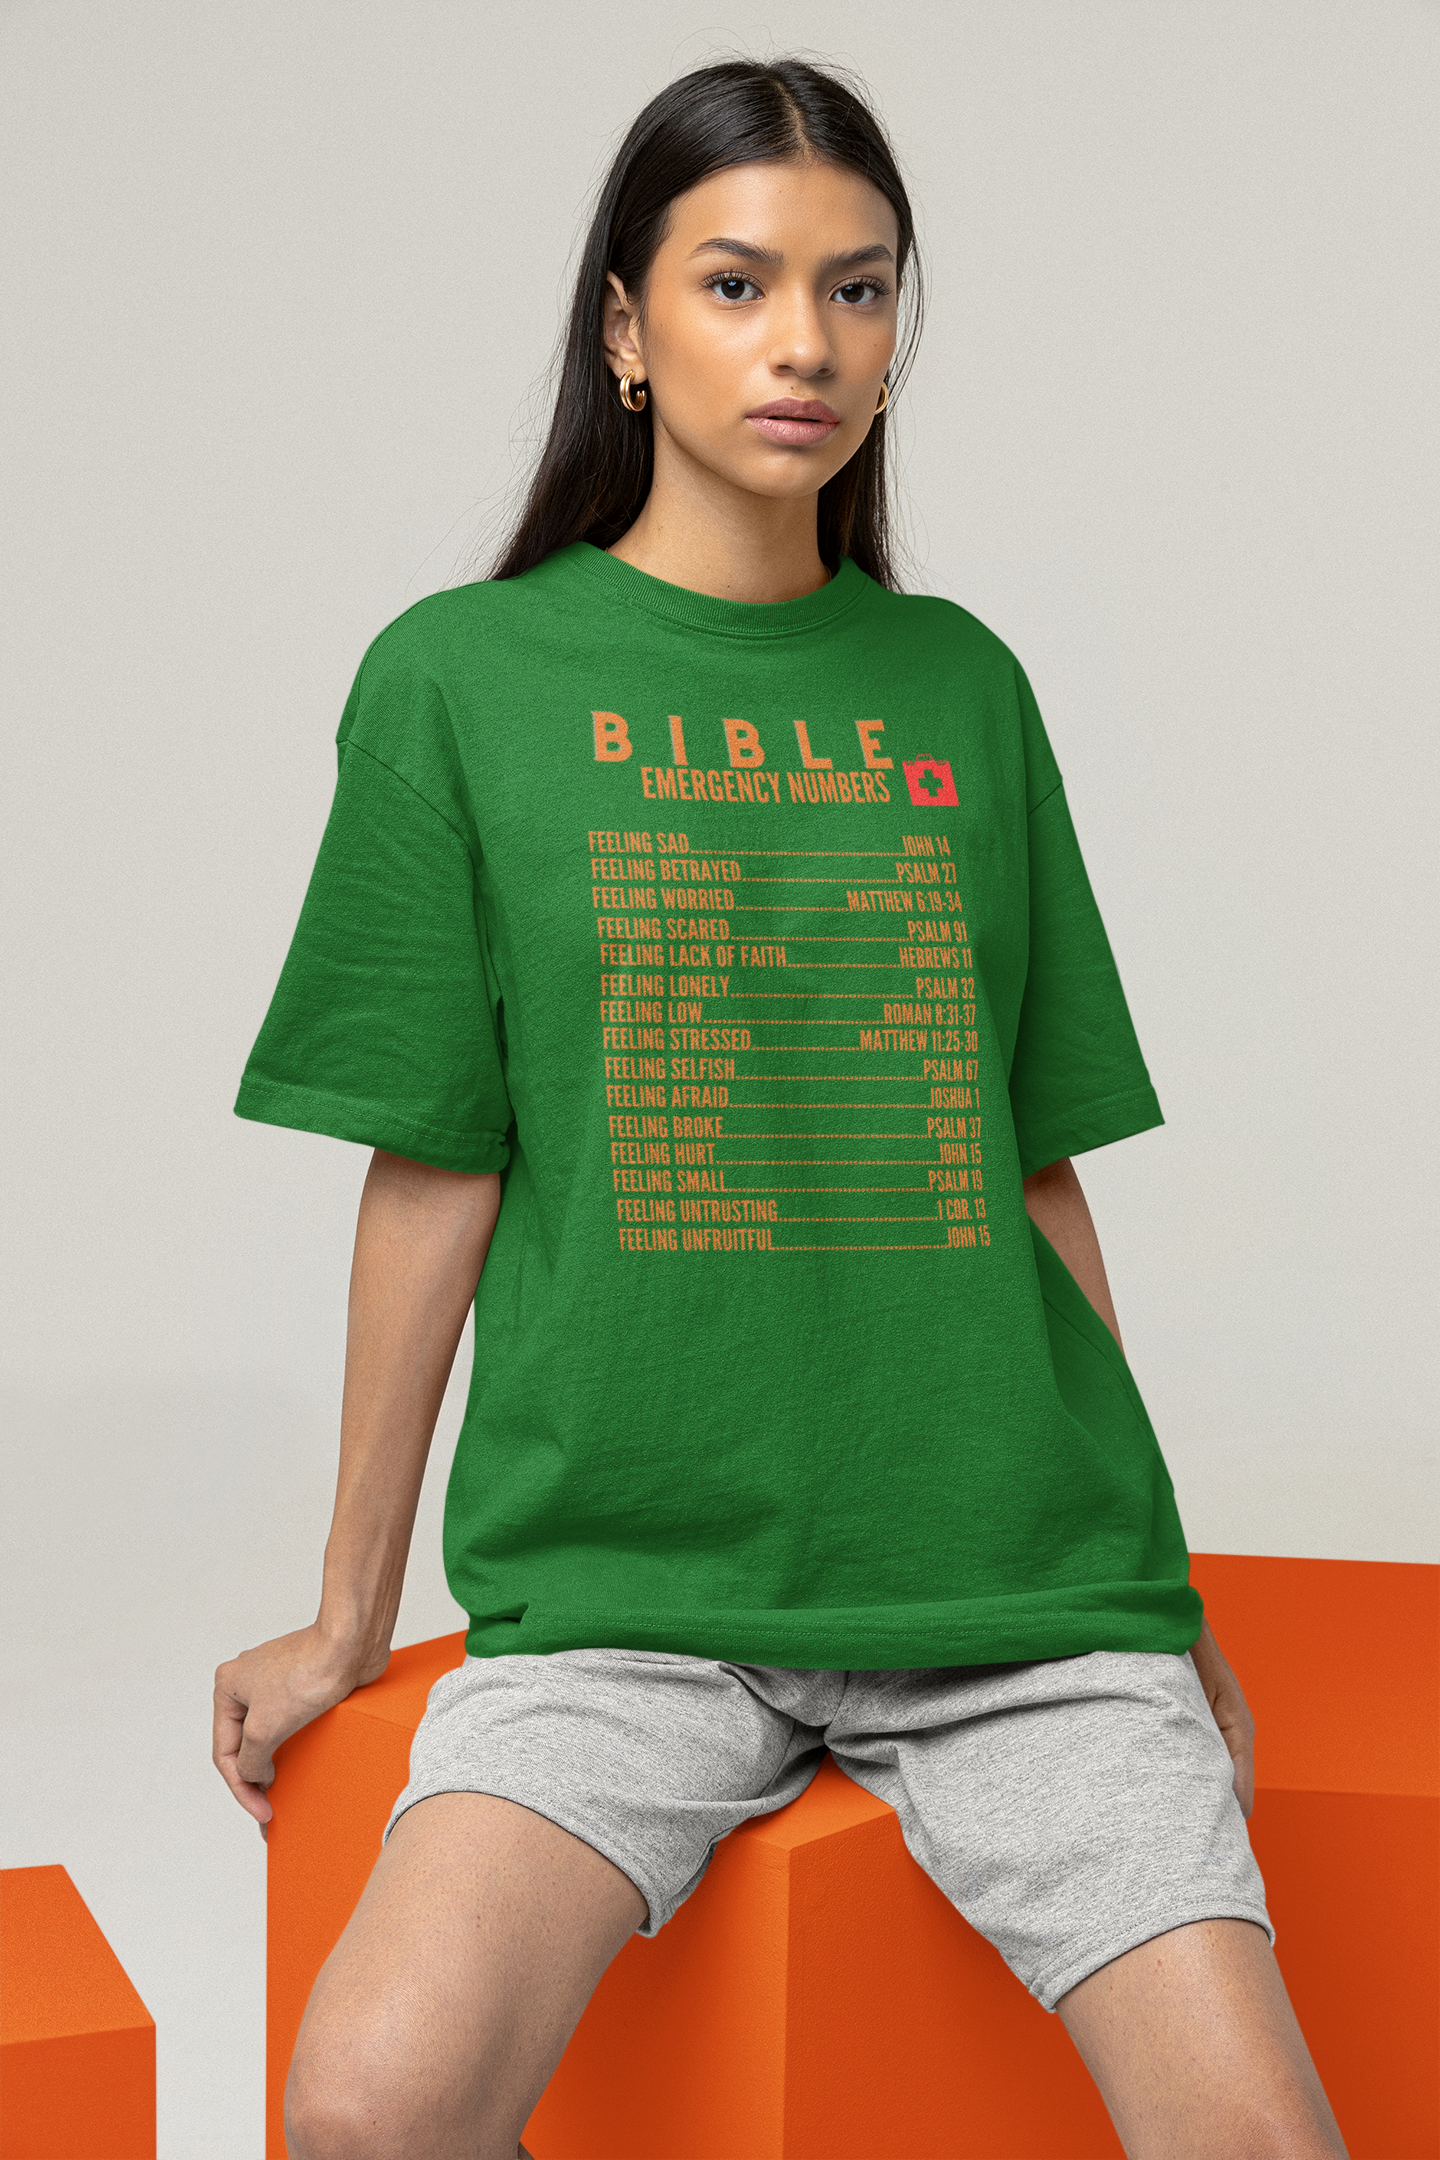 Emergency Bible Numbers Christian T-Shirt - Short Sleeve Orange